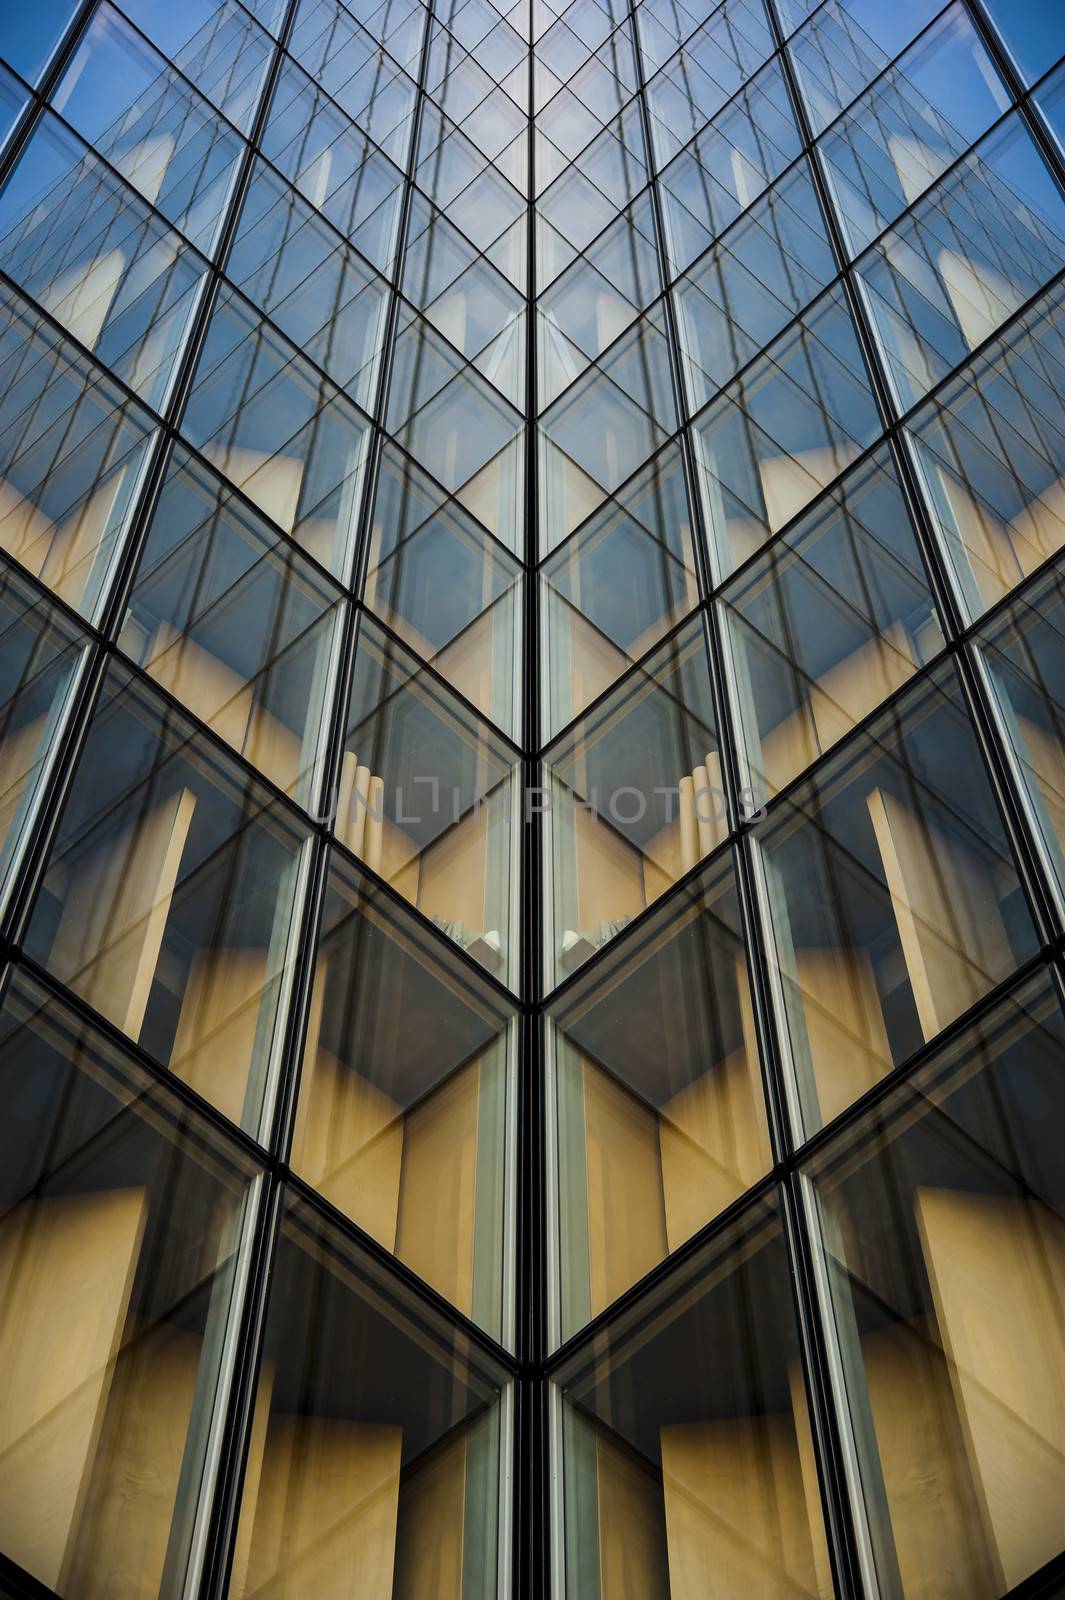 Details of a glasses skyscraper in Paris